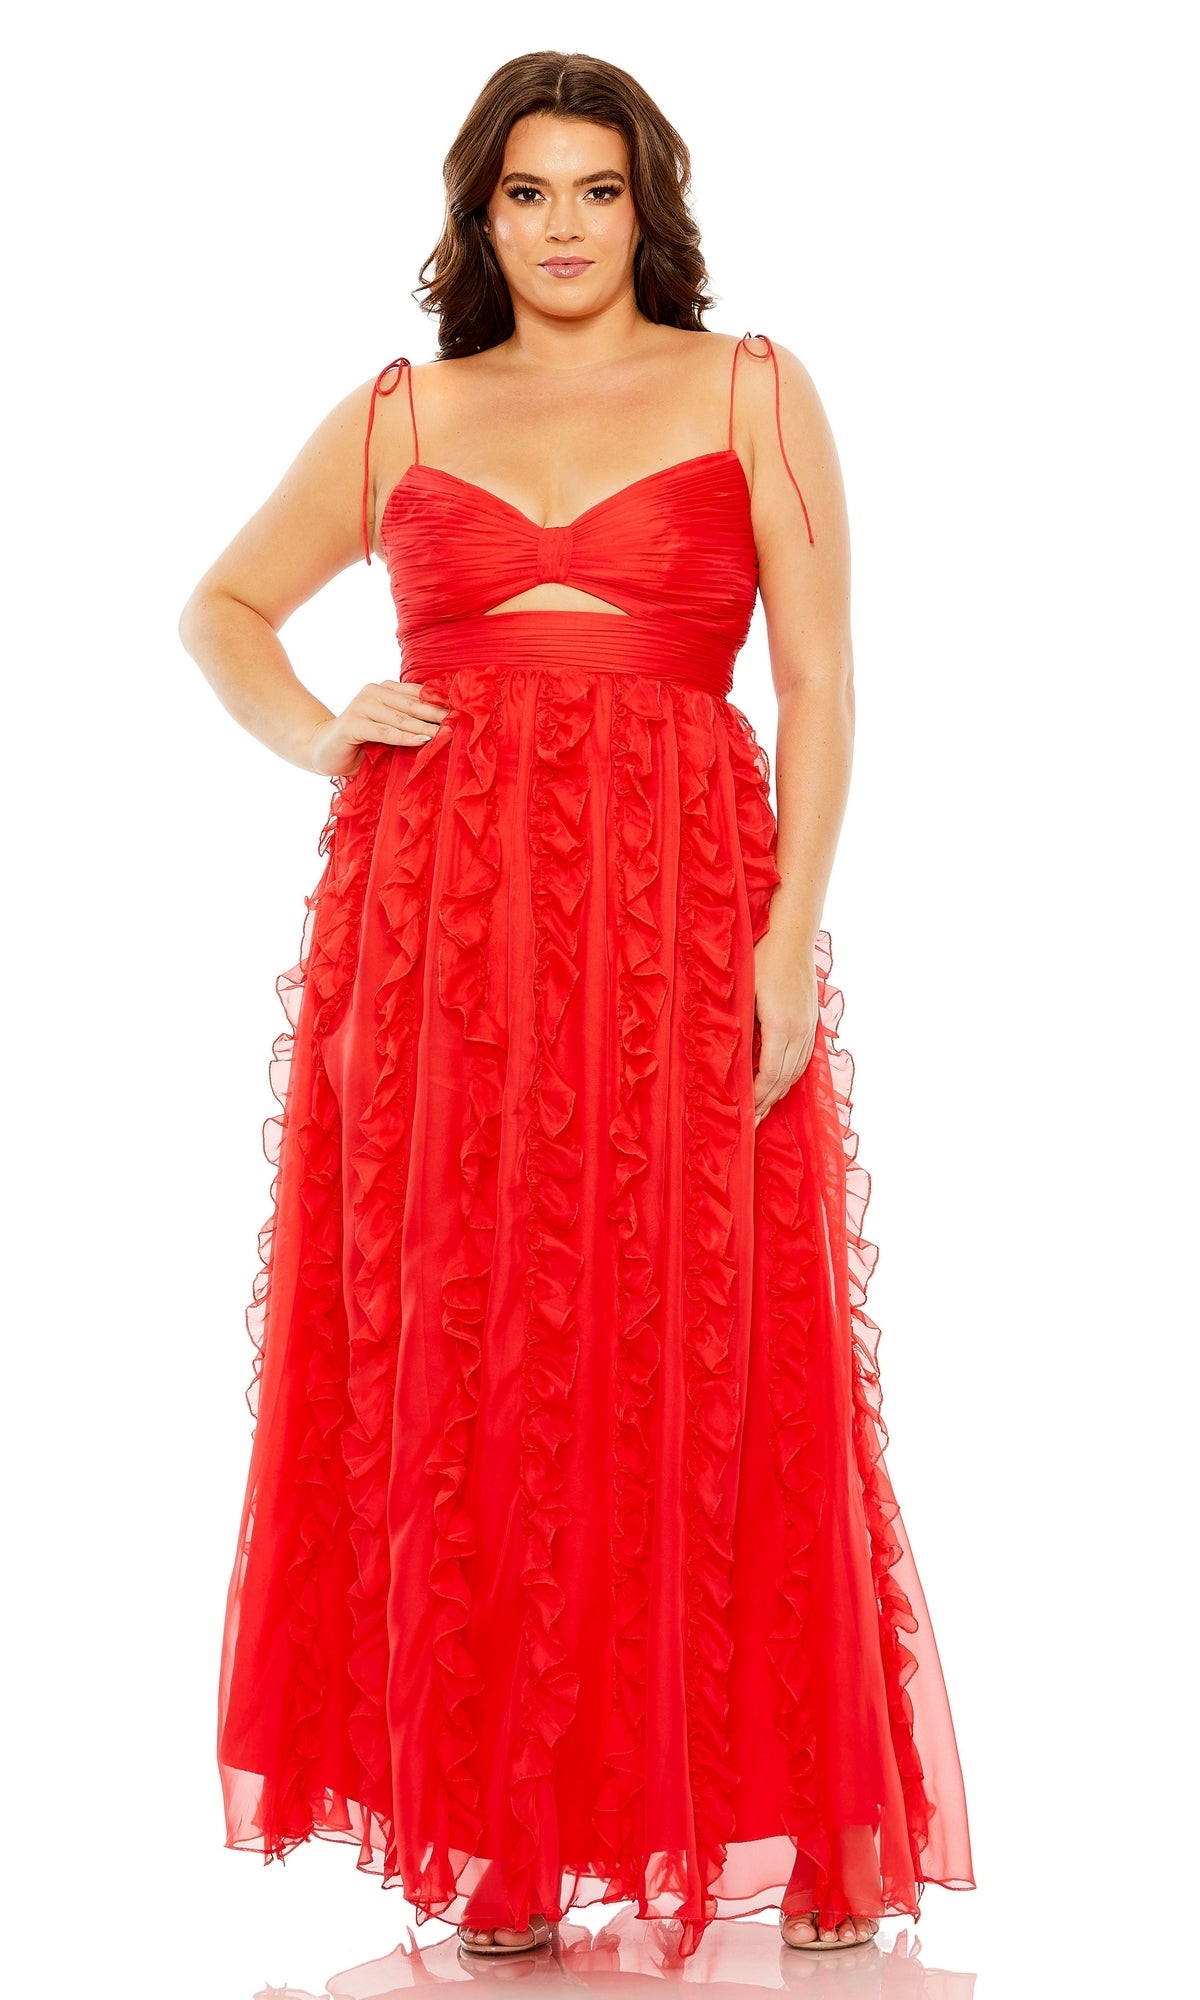 Long Plus-Size Formal Dress 68543 by Mac Duggal